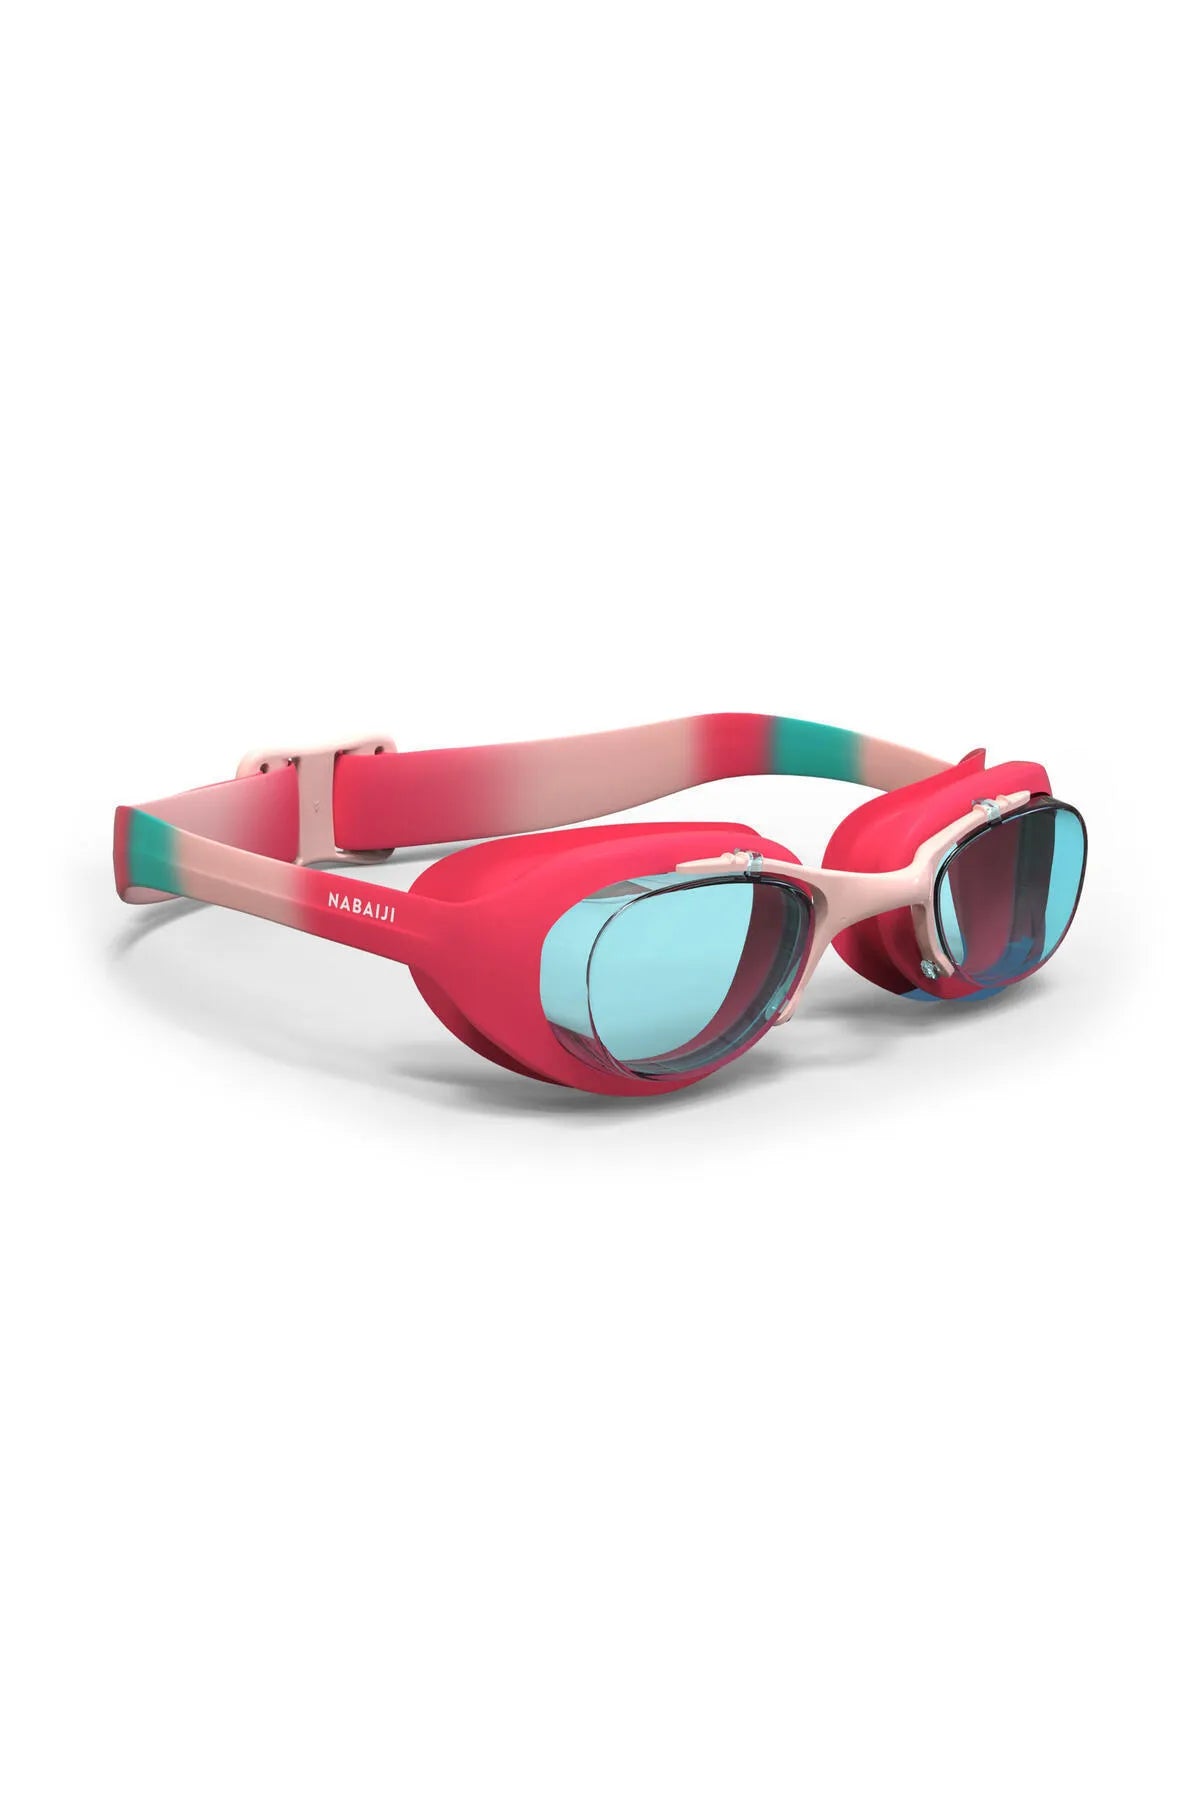 Nabaiji Swimming Goggles - Size S - Transparent Lenses - Pink - 100 Xbase Dye